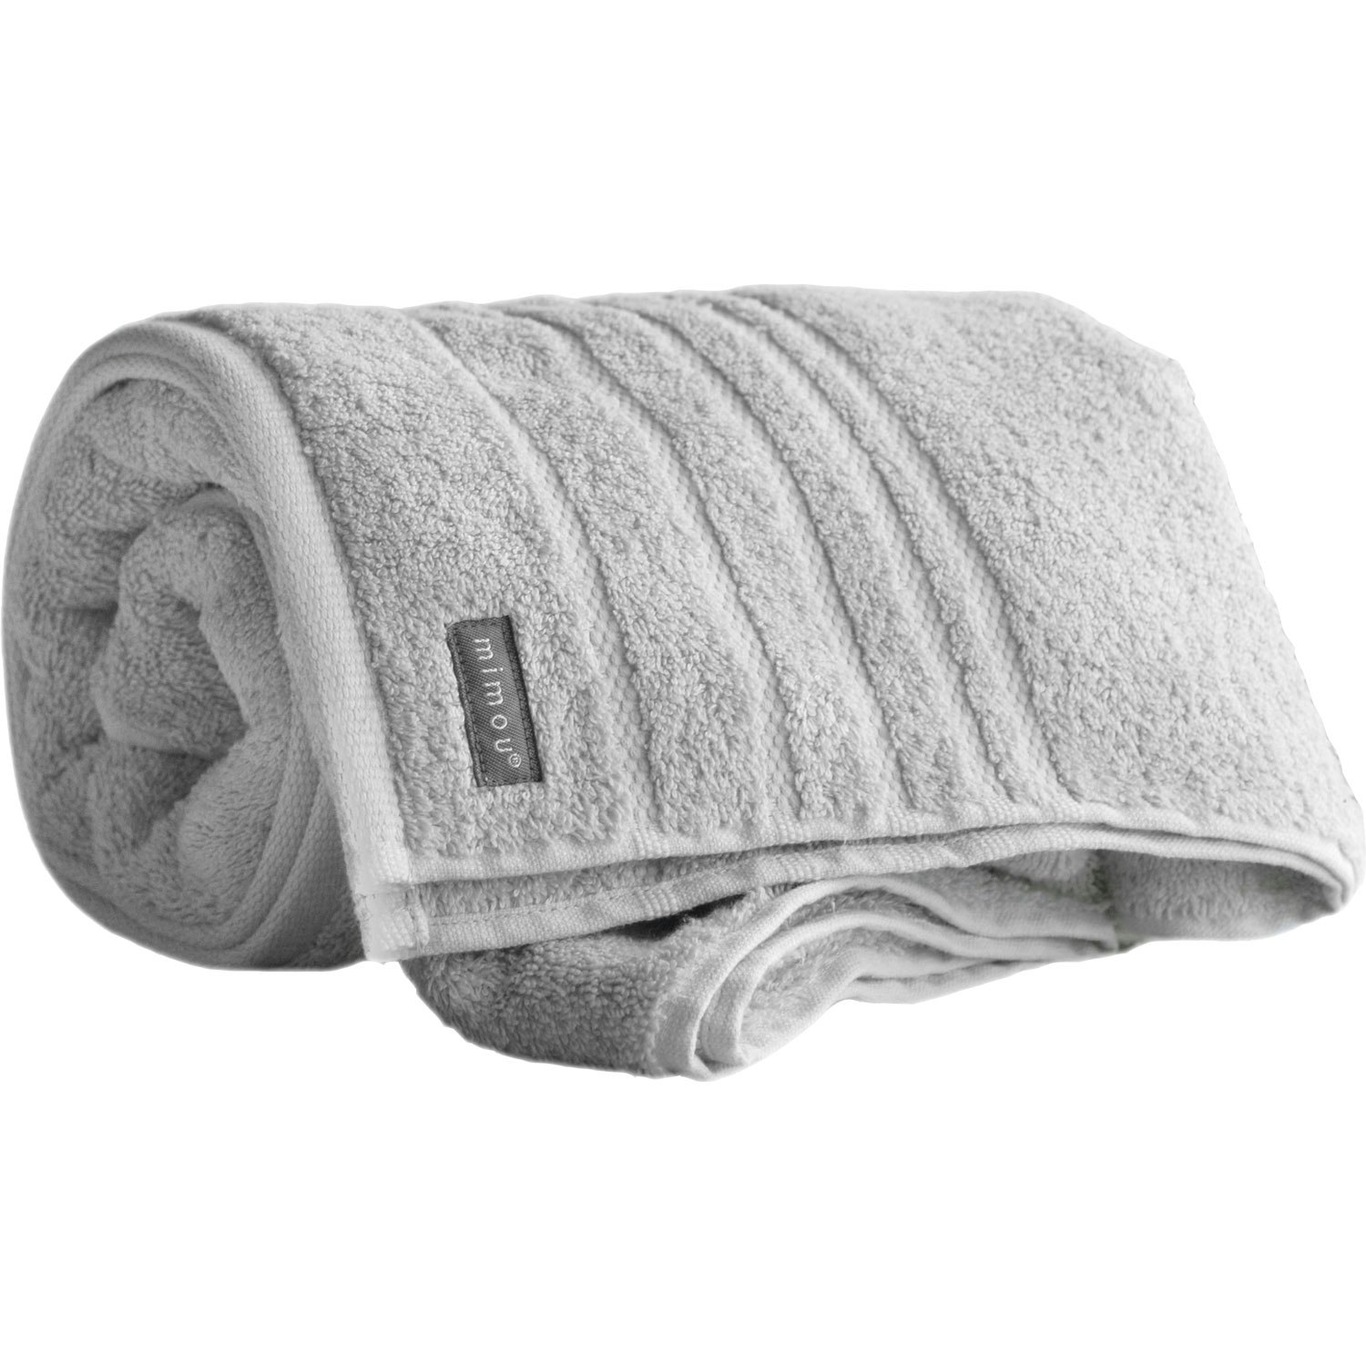 https://royaldesign.com/image/2/mimou-devon-bath-towel-70x140-cm-5?w=800&quality=80